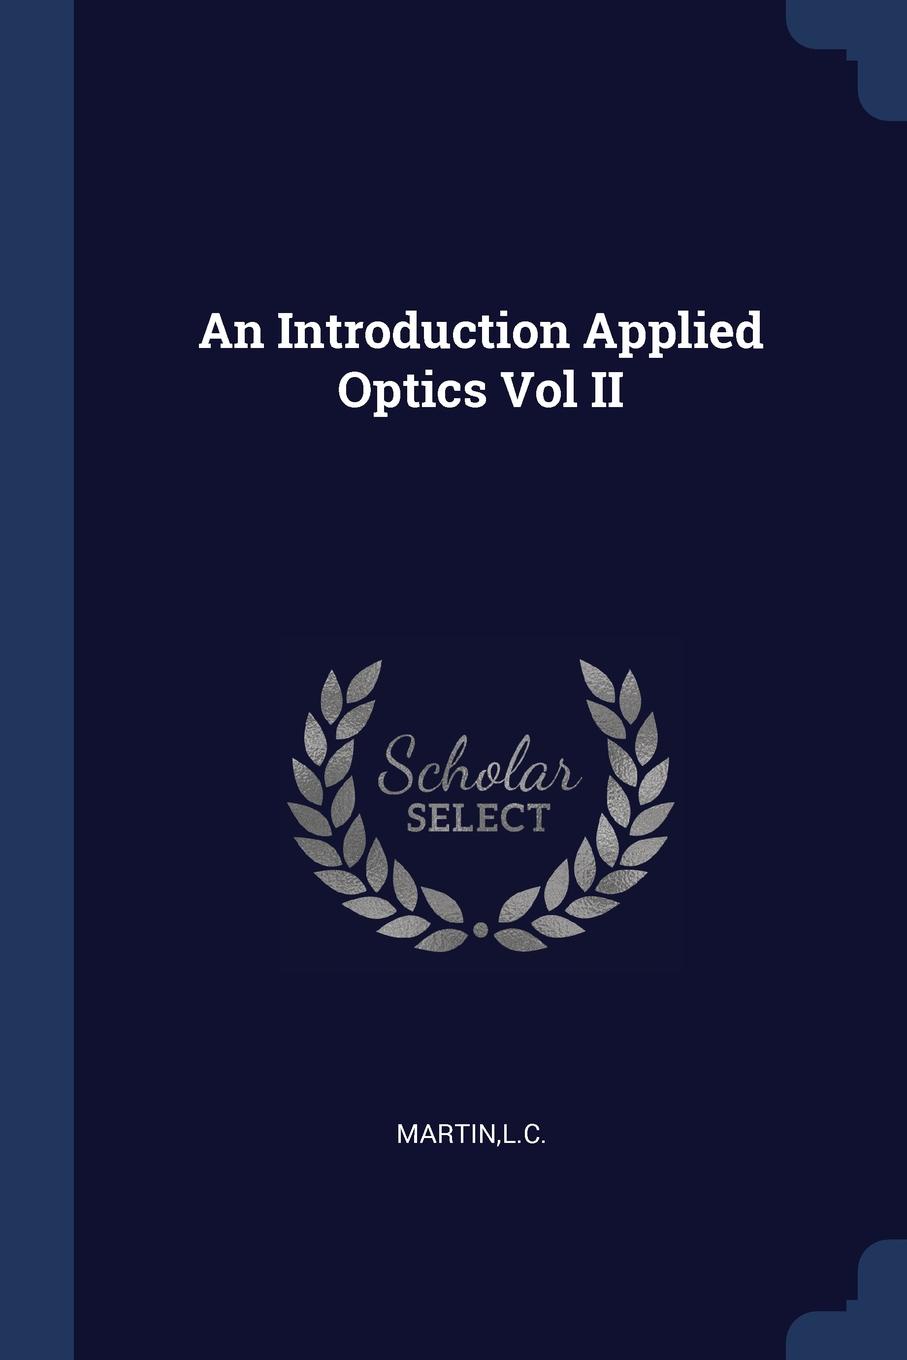 An Introduction Applied Optics Vol II